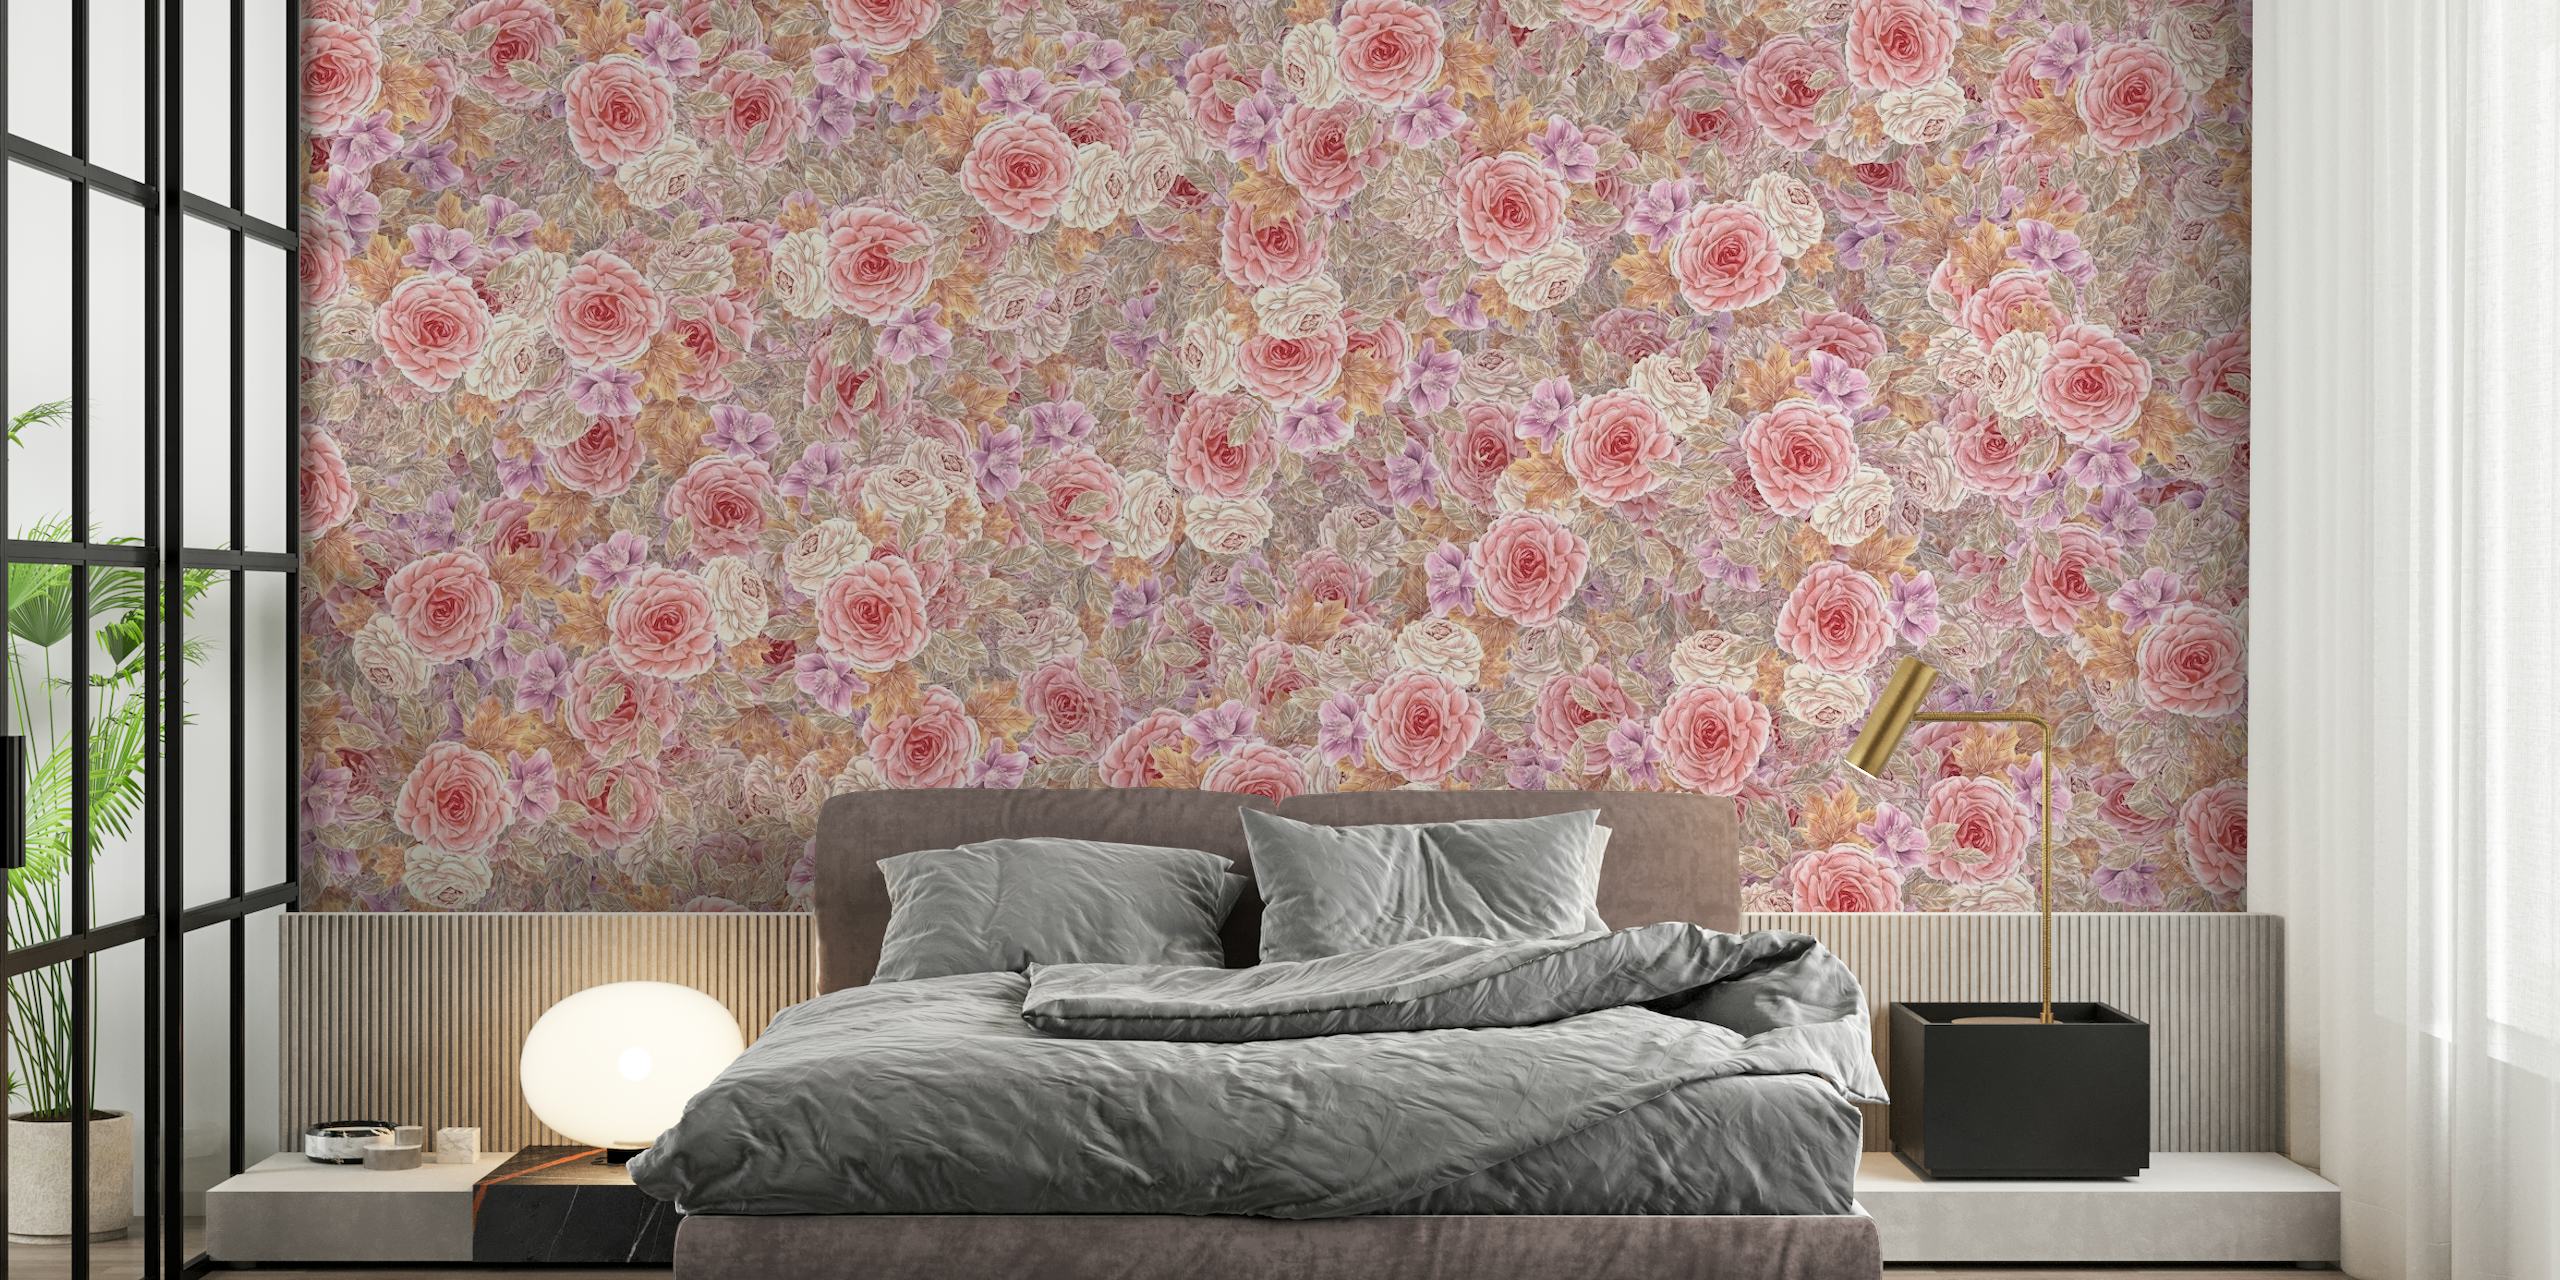 Waterverf theeroosjes in roze, oranje, lila en taupe op een fotobehang